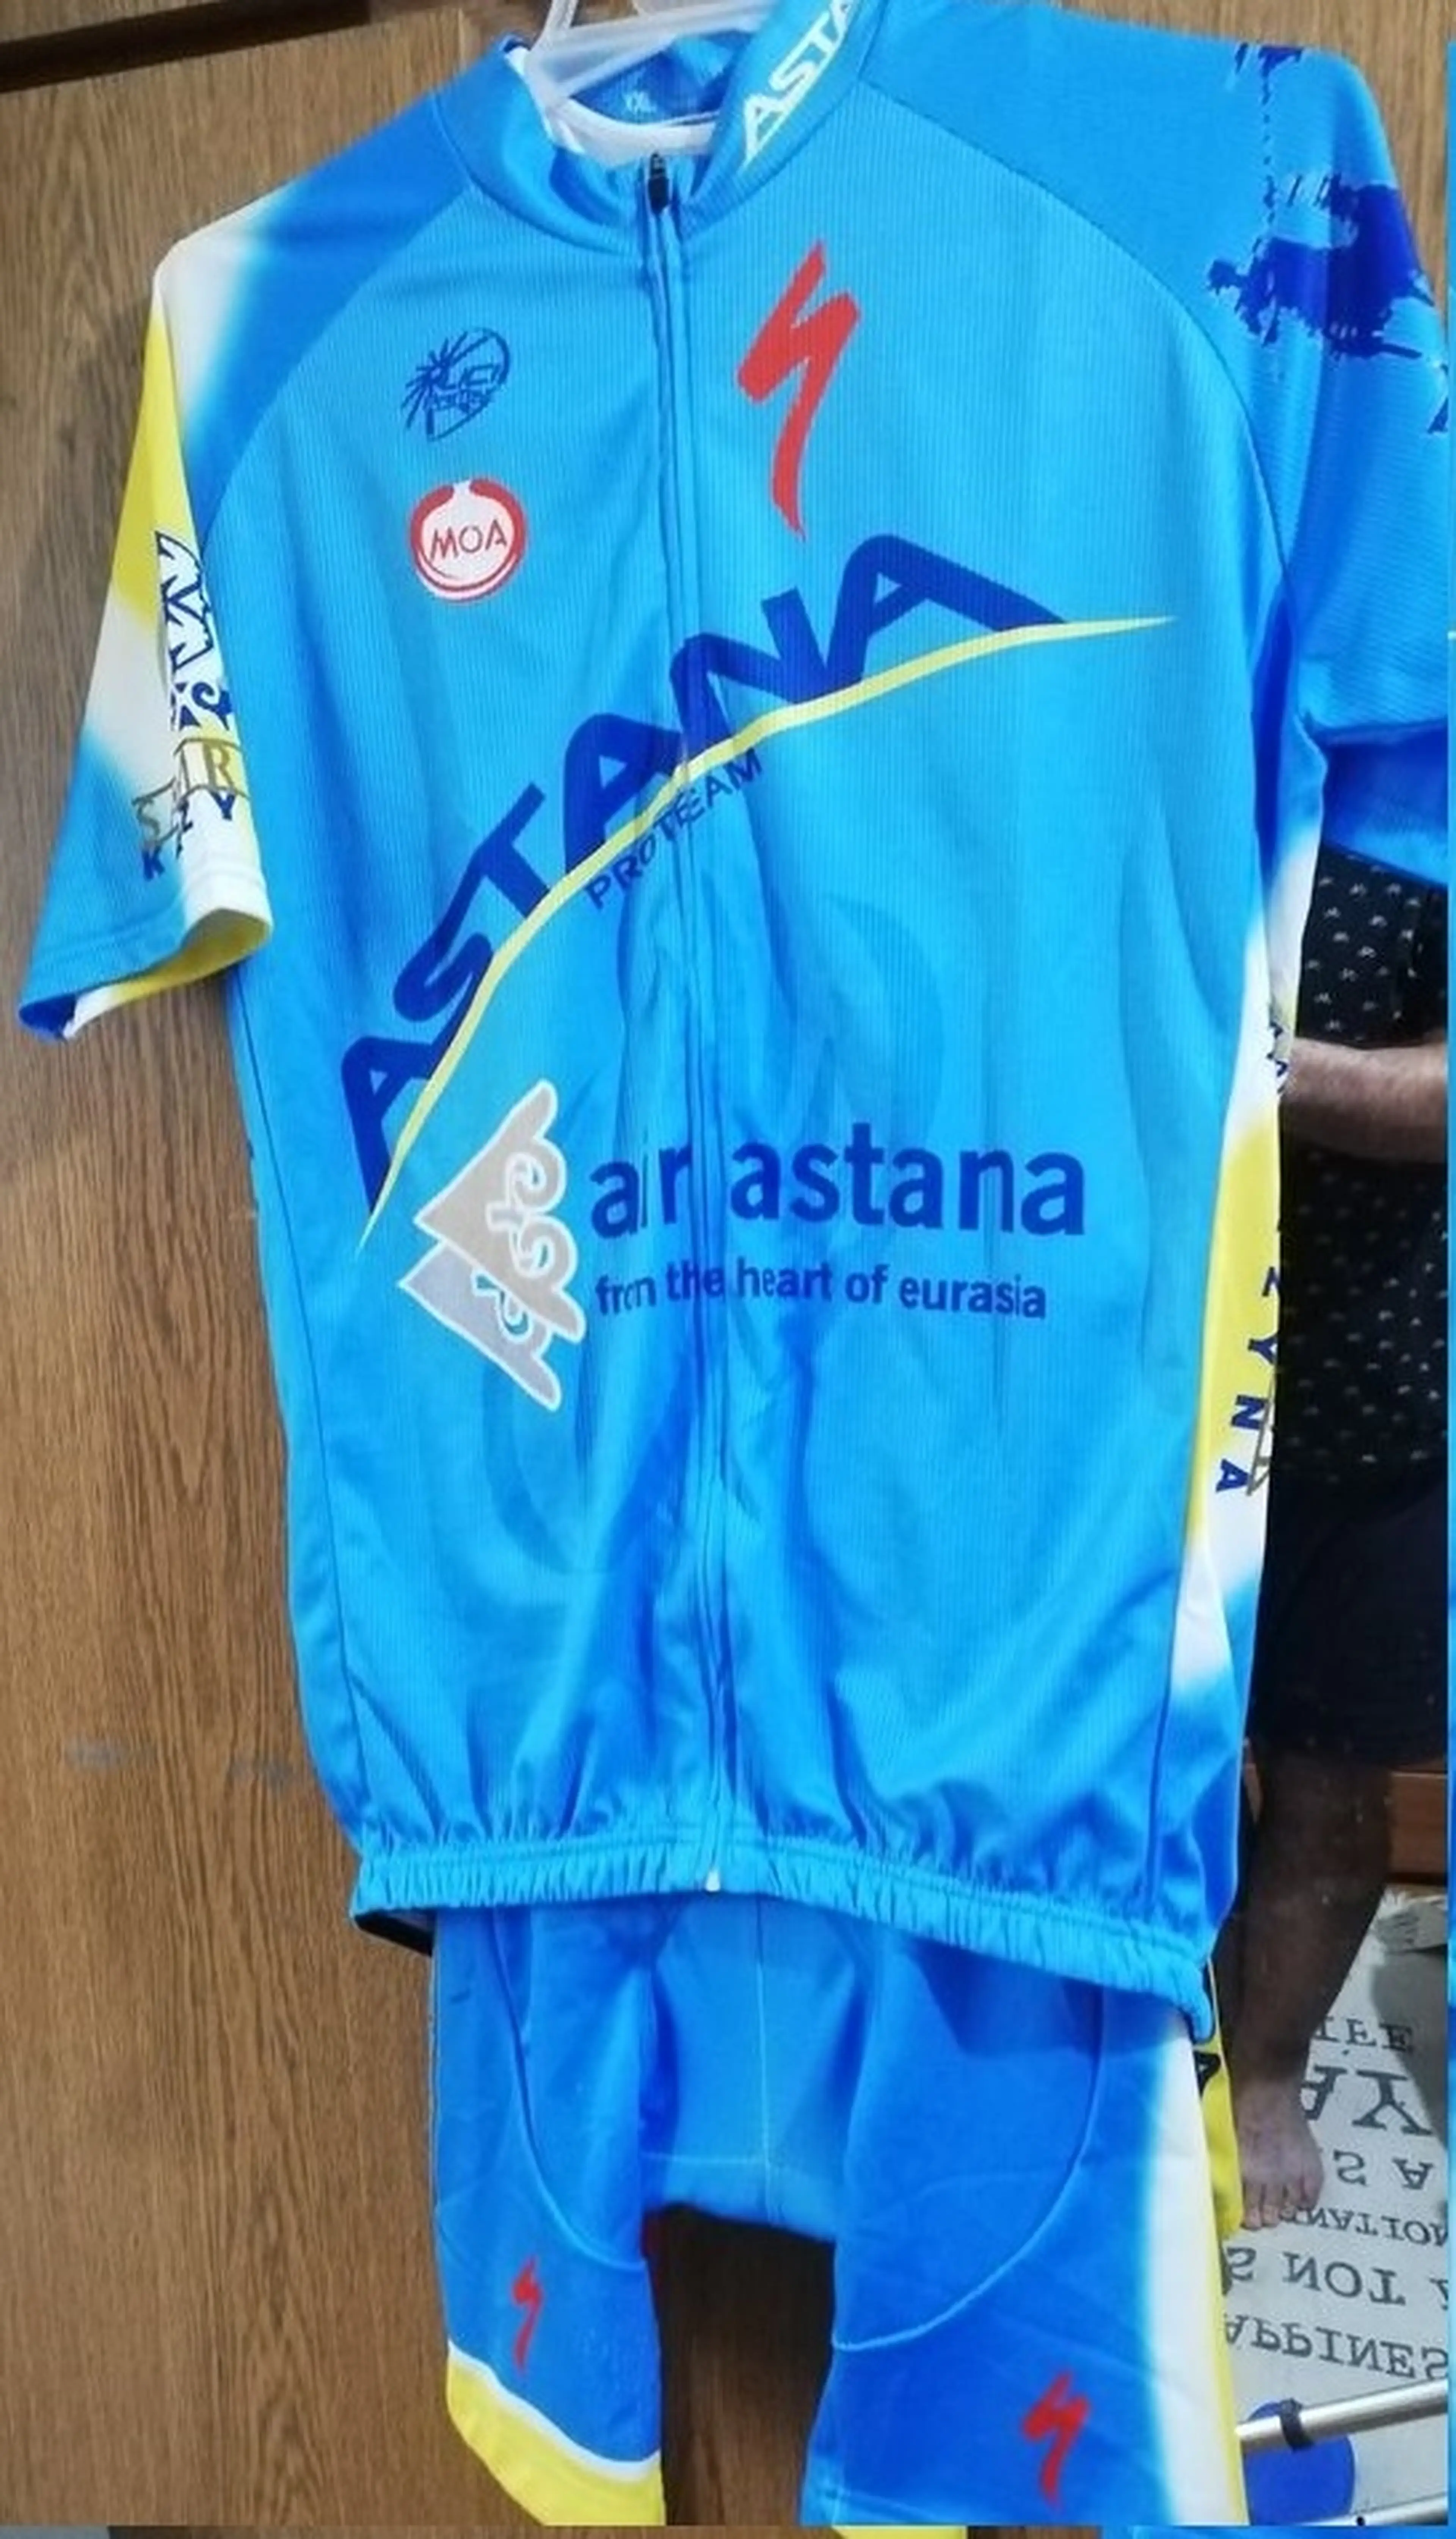 Image Vand echipament team Astana